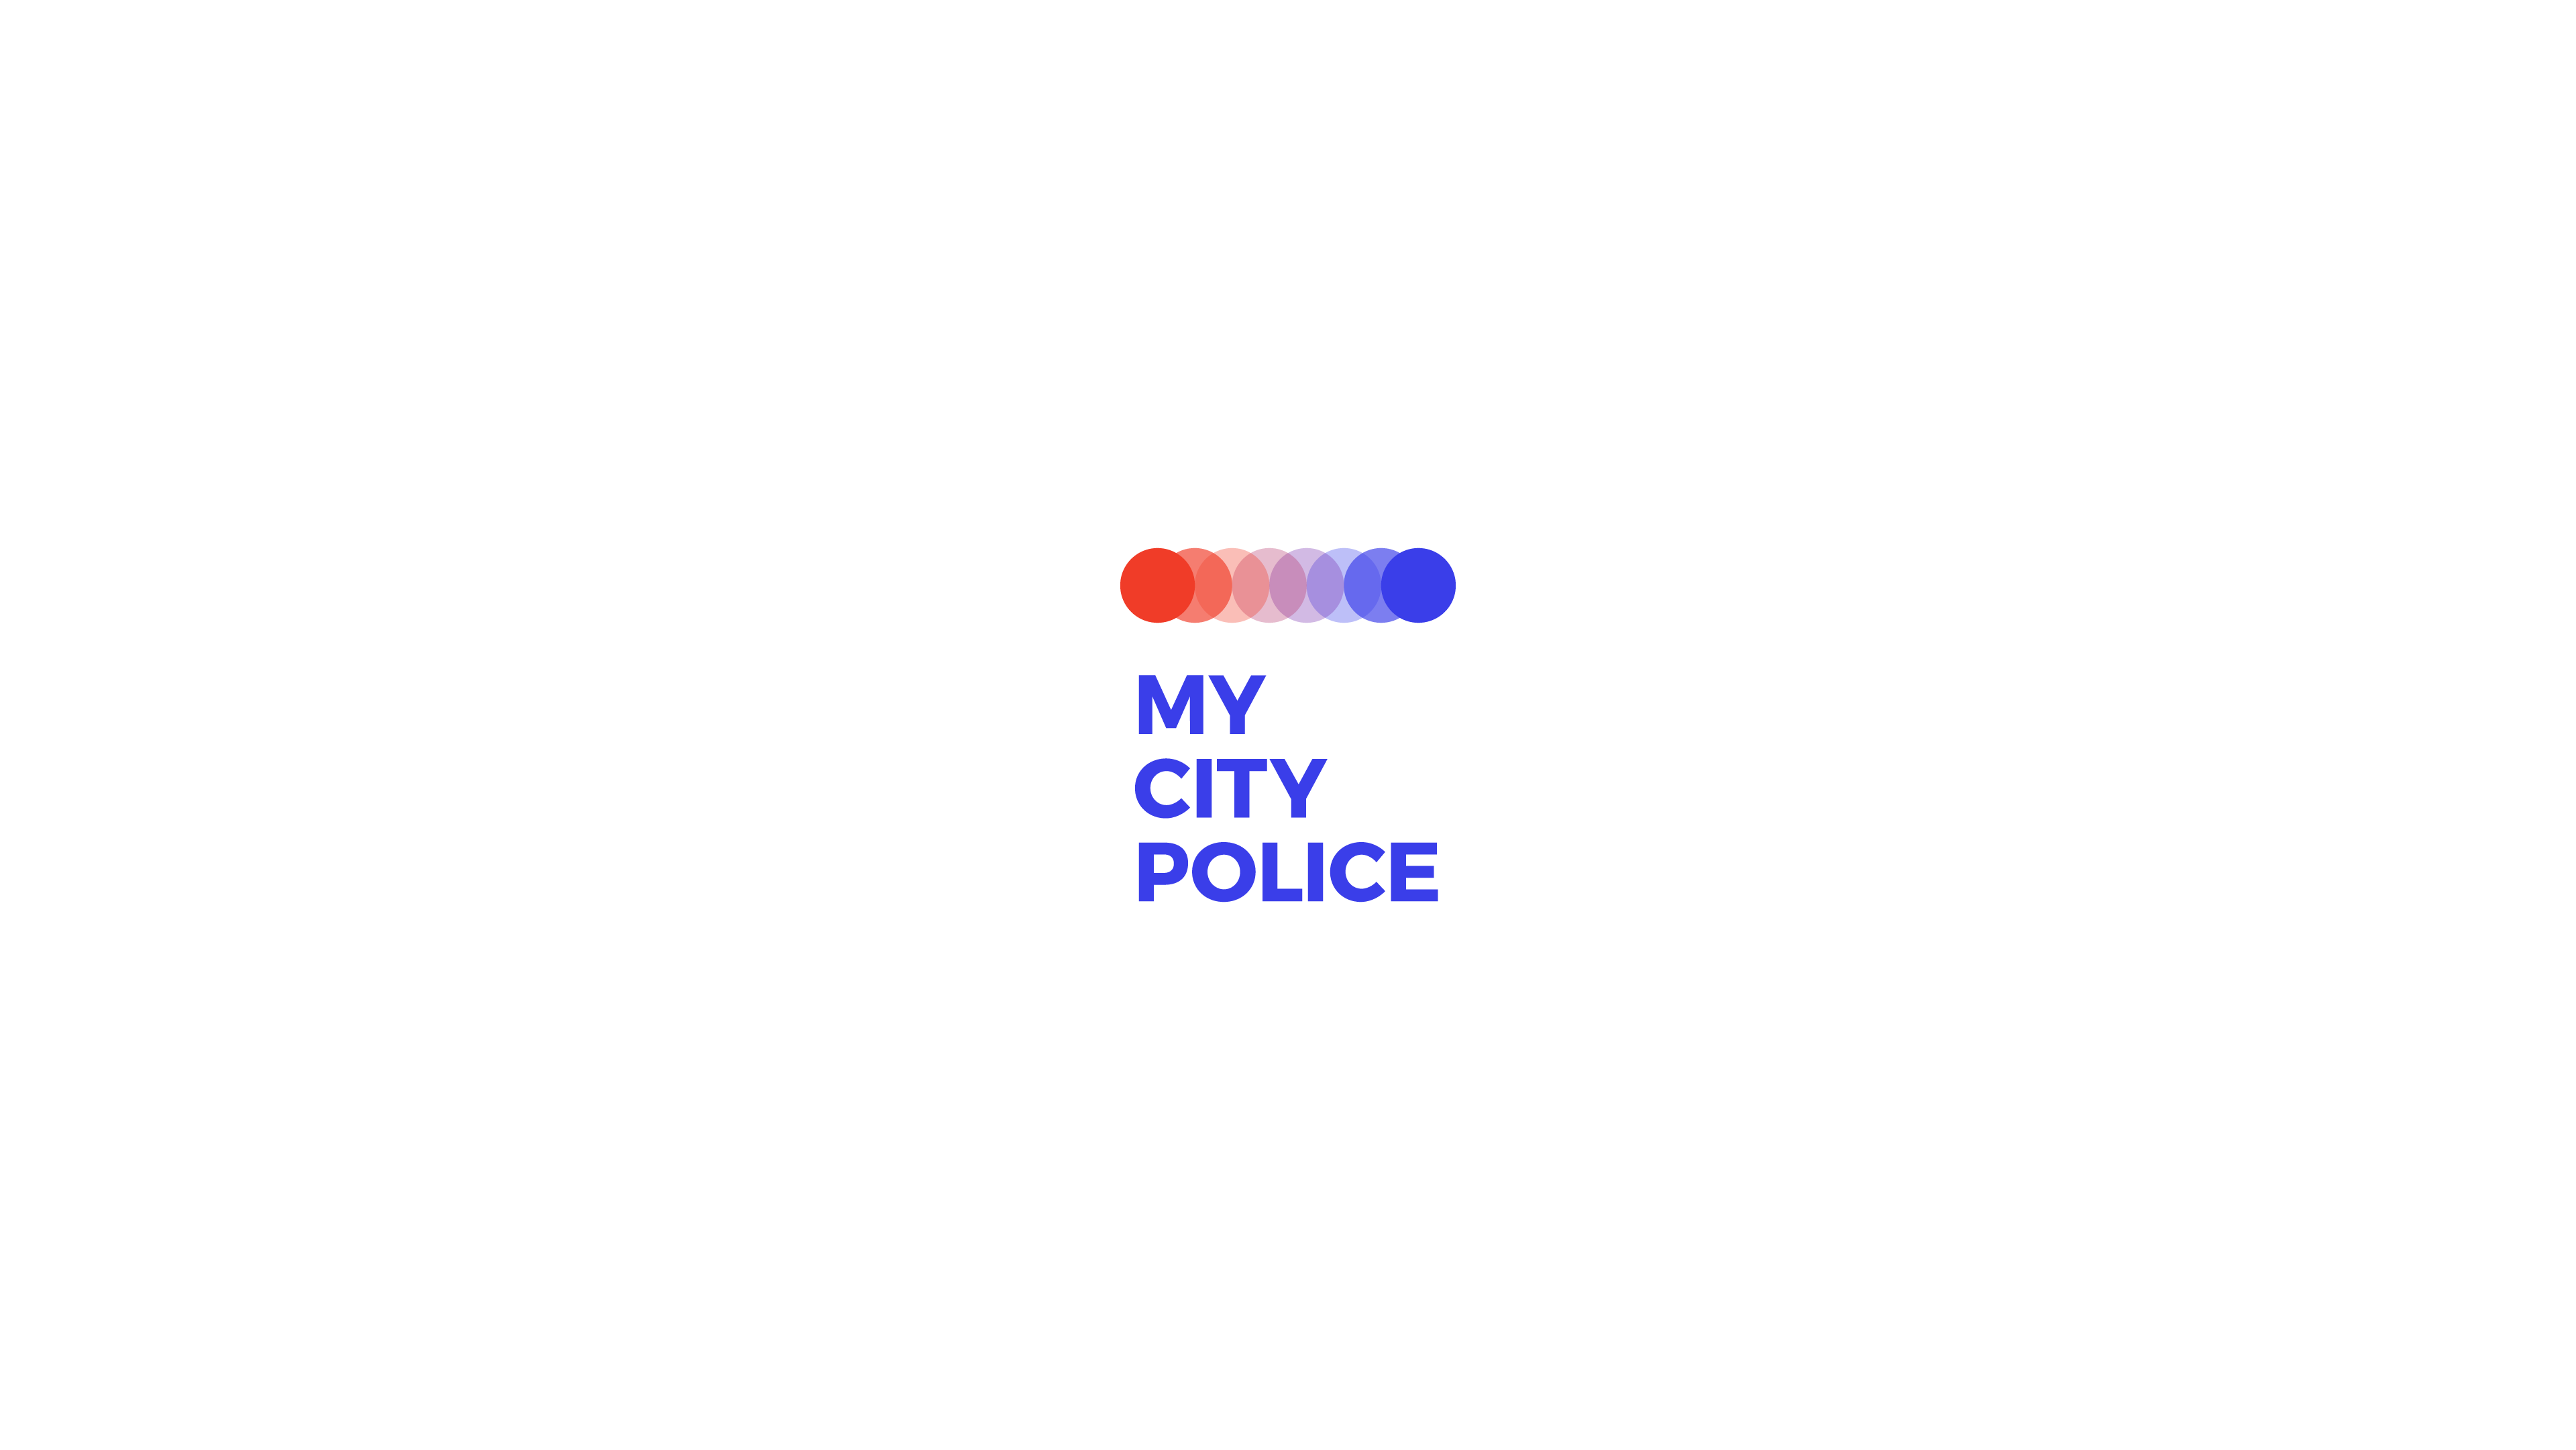 My City Police - The Codeine Design